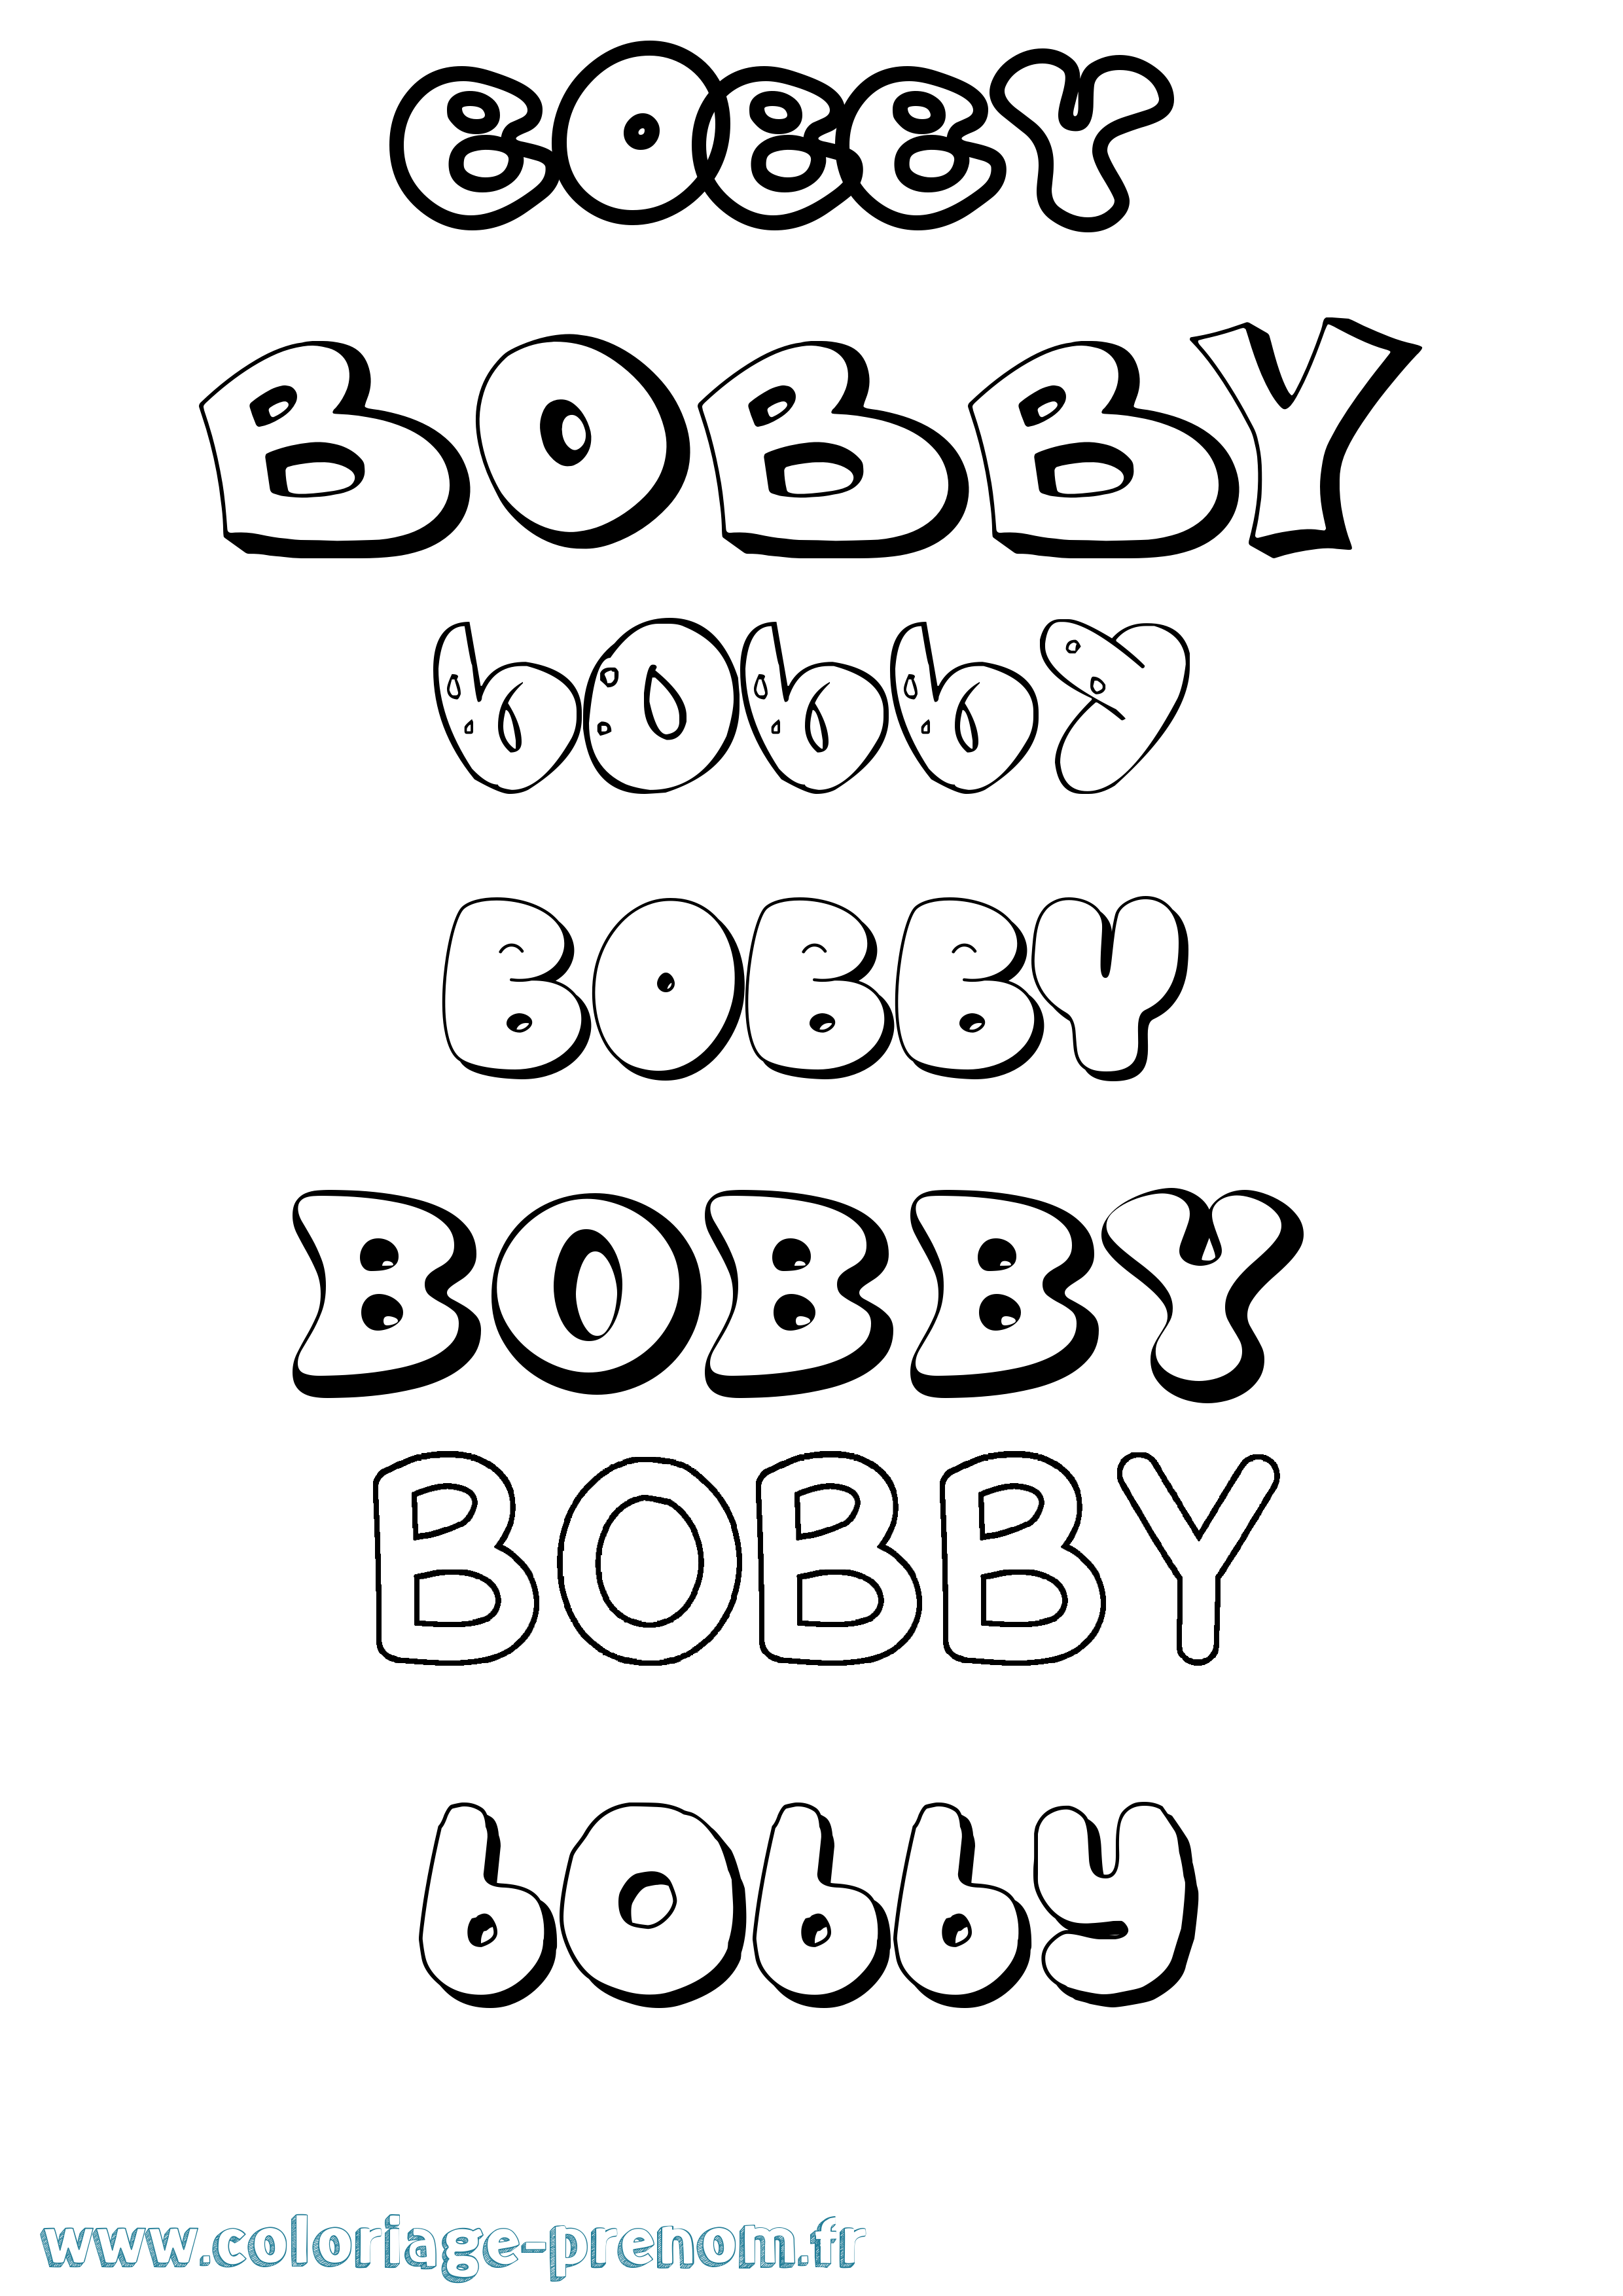 Coloriage prénom Bobby Bubble